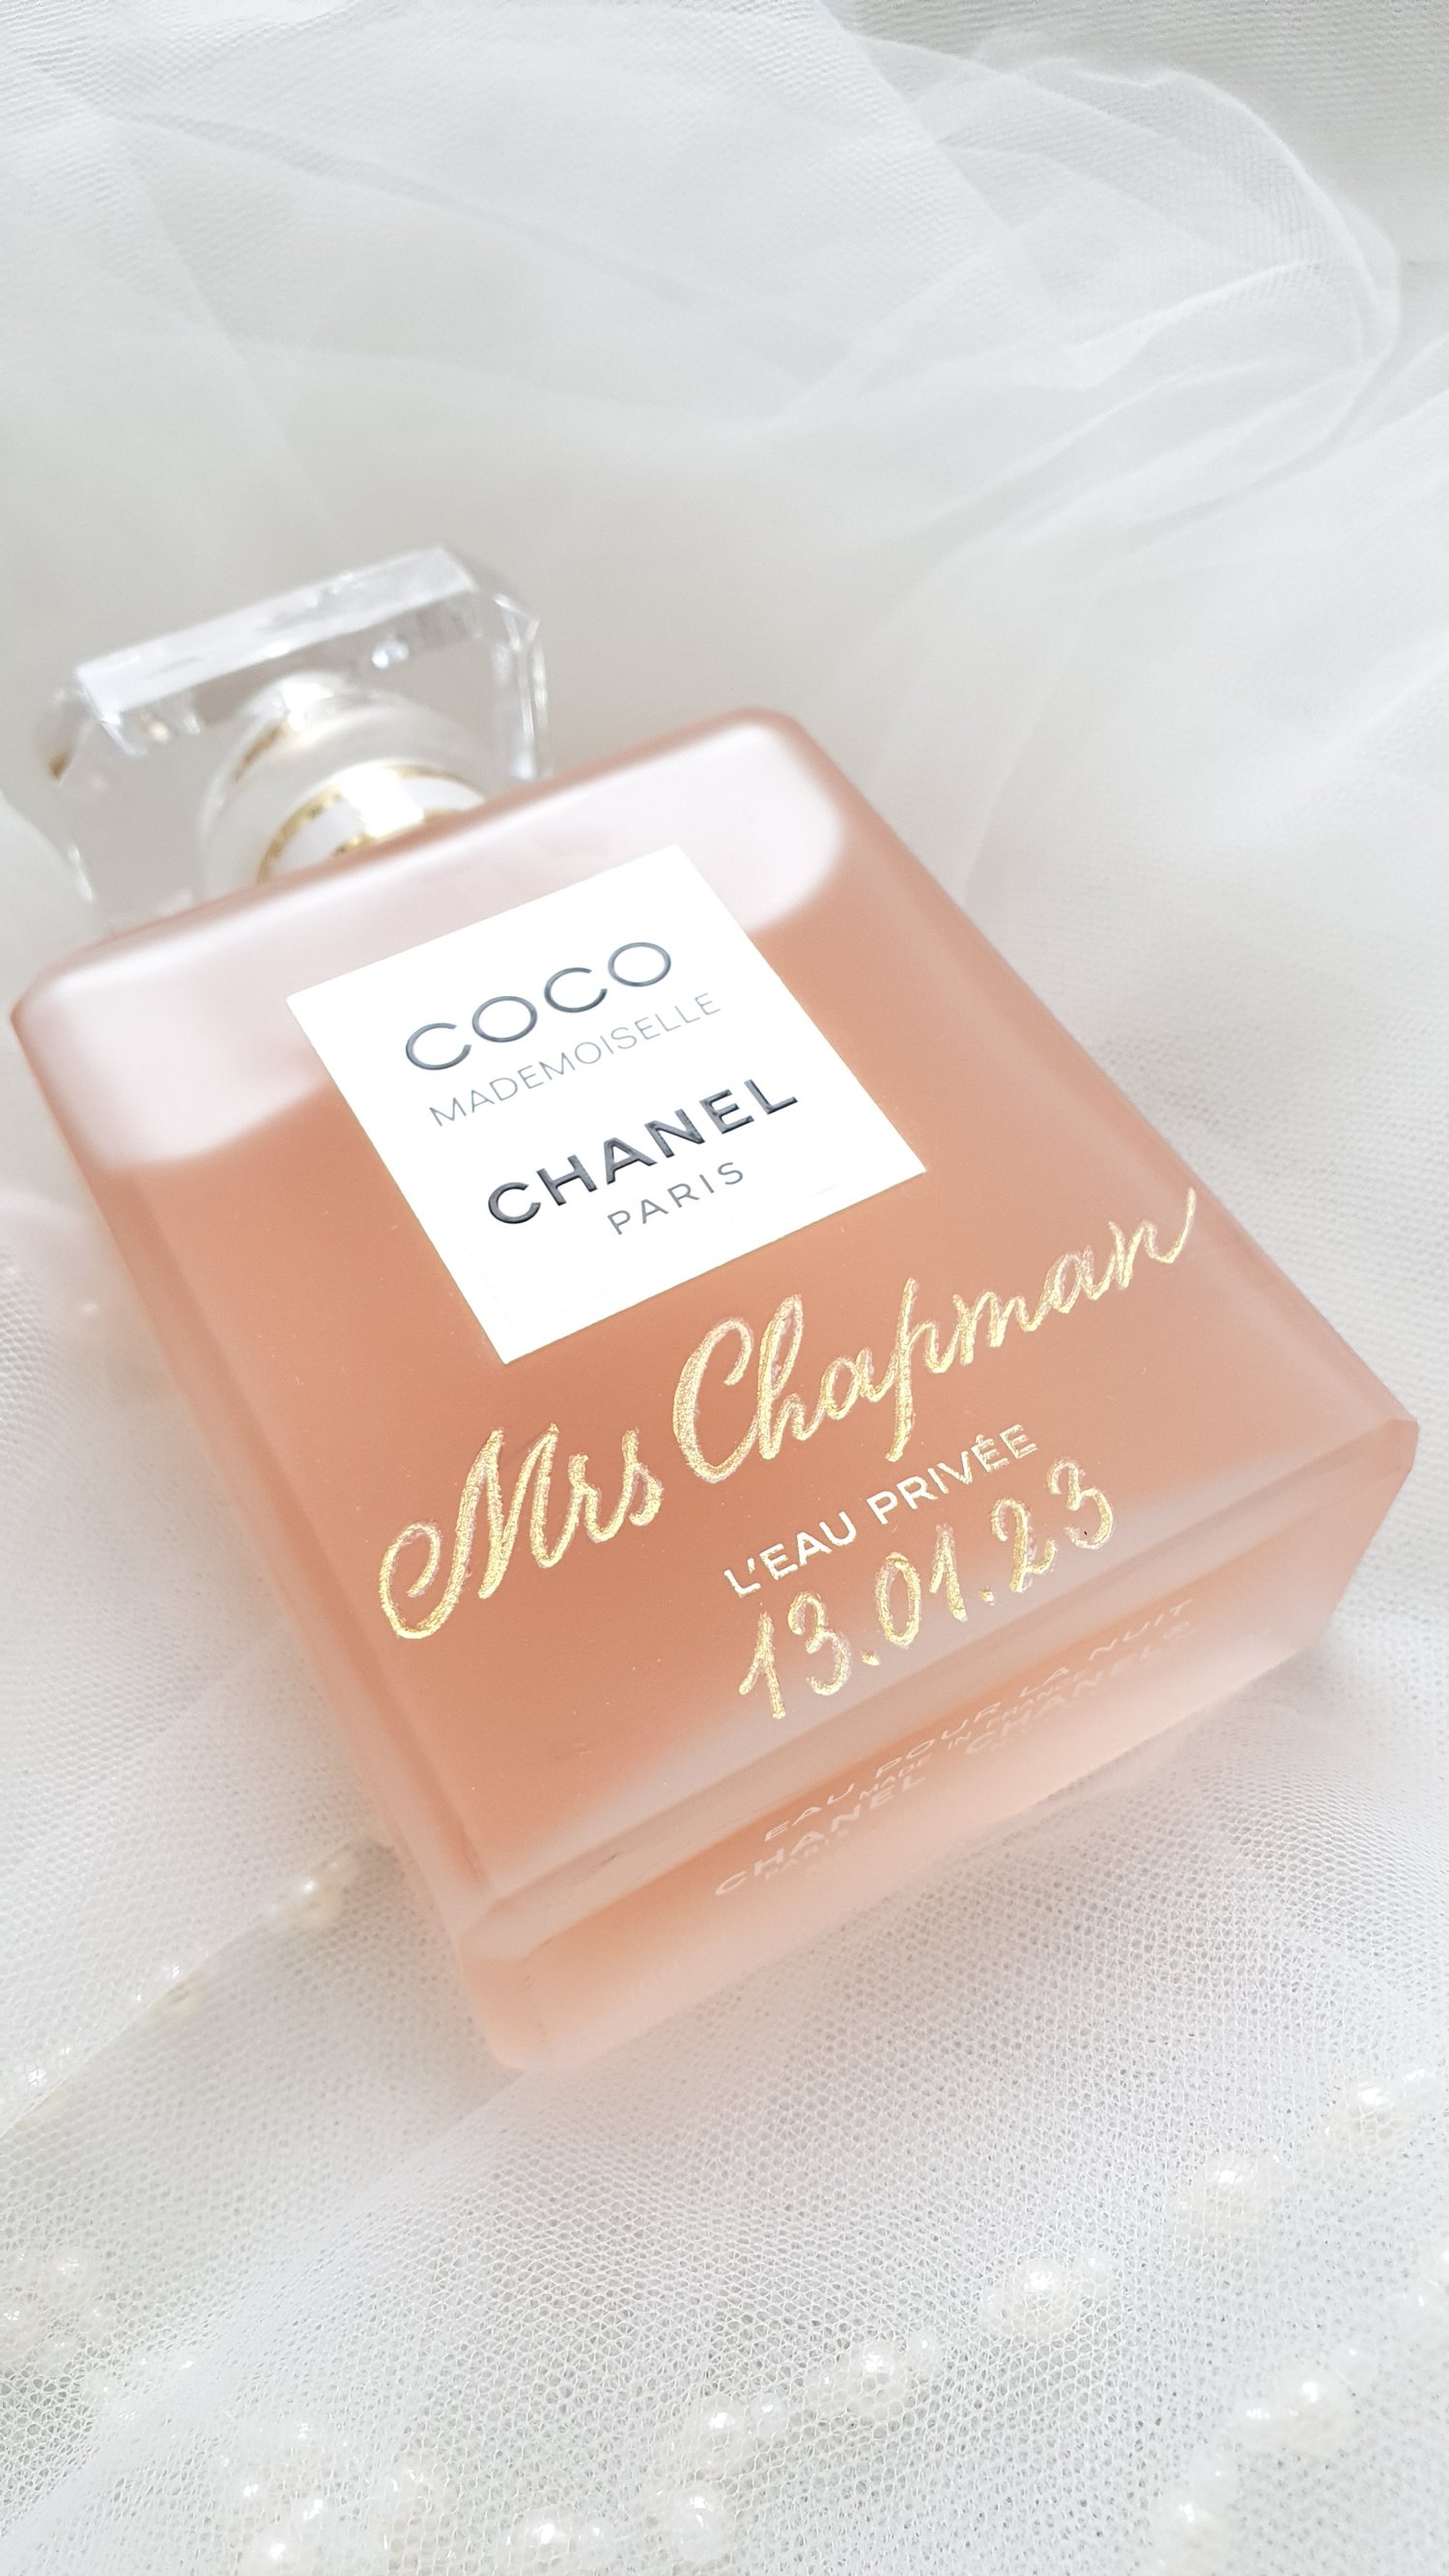 Chanel Coco Mademoiselle edp 100ml Best Price